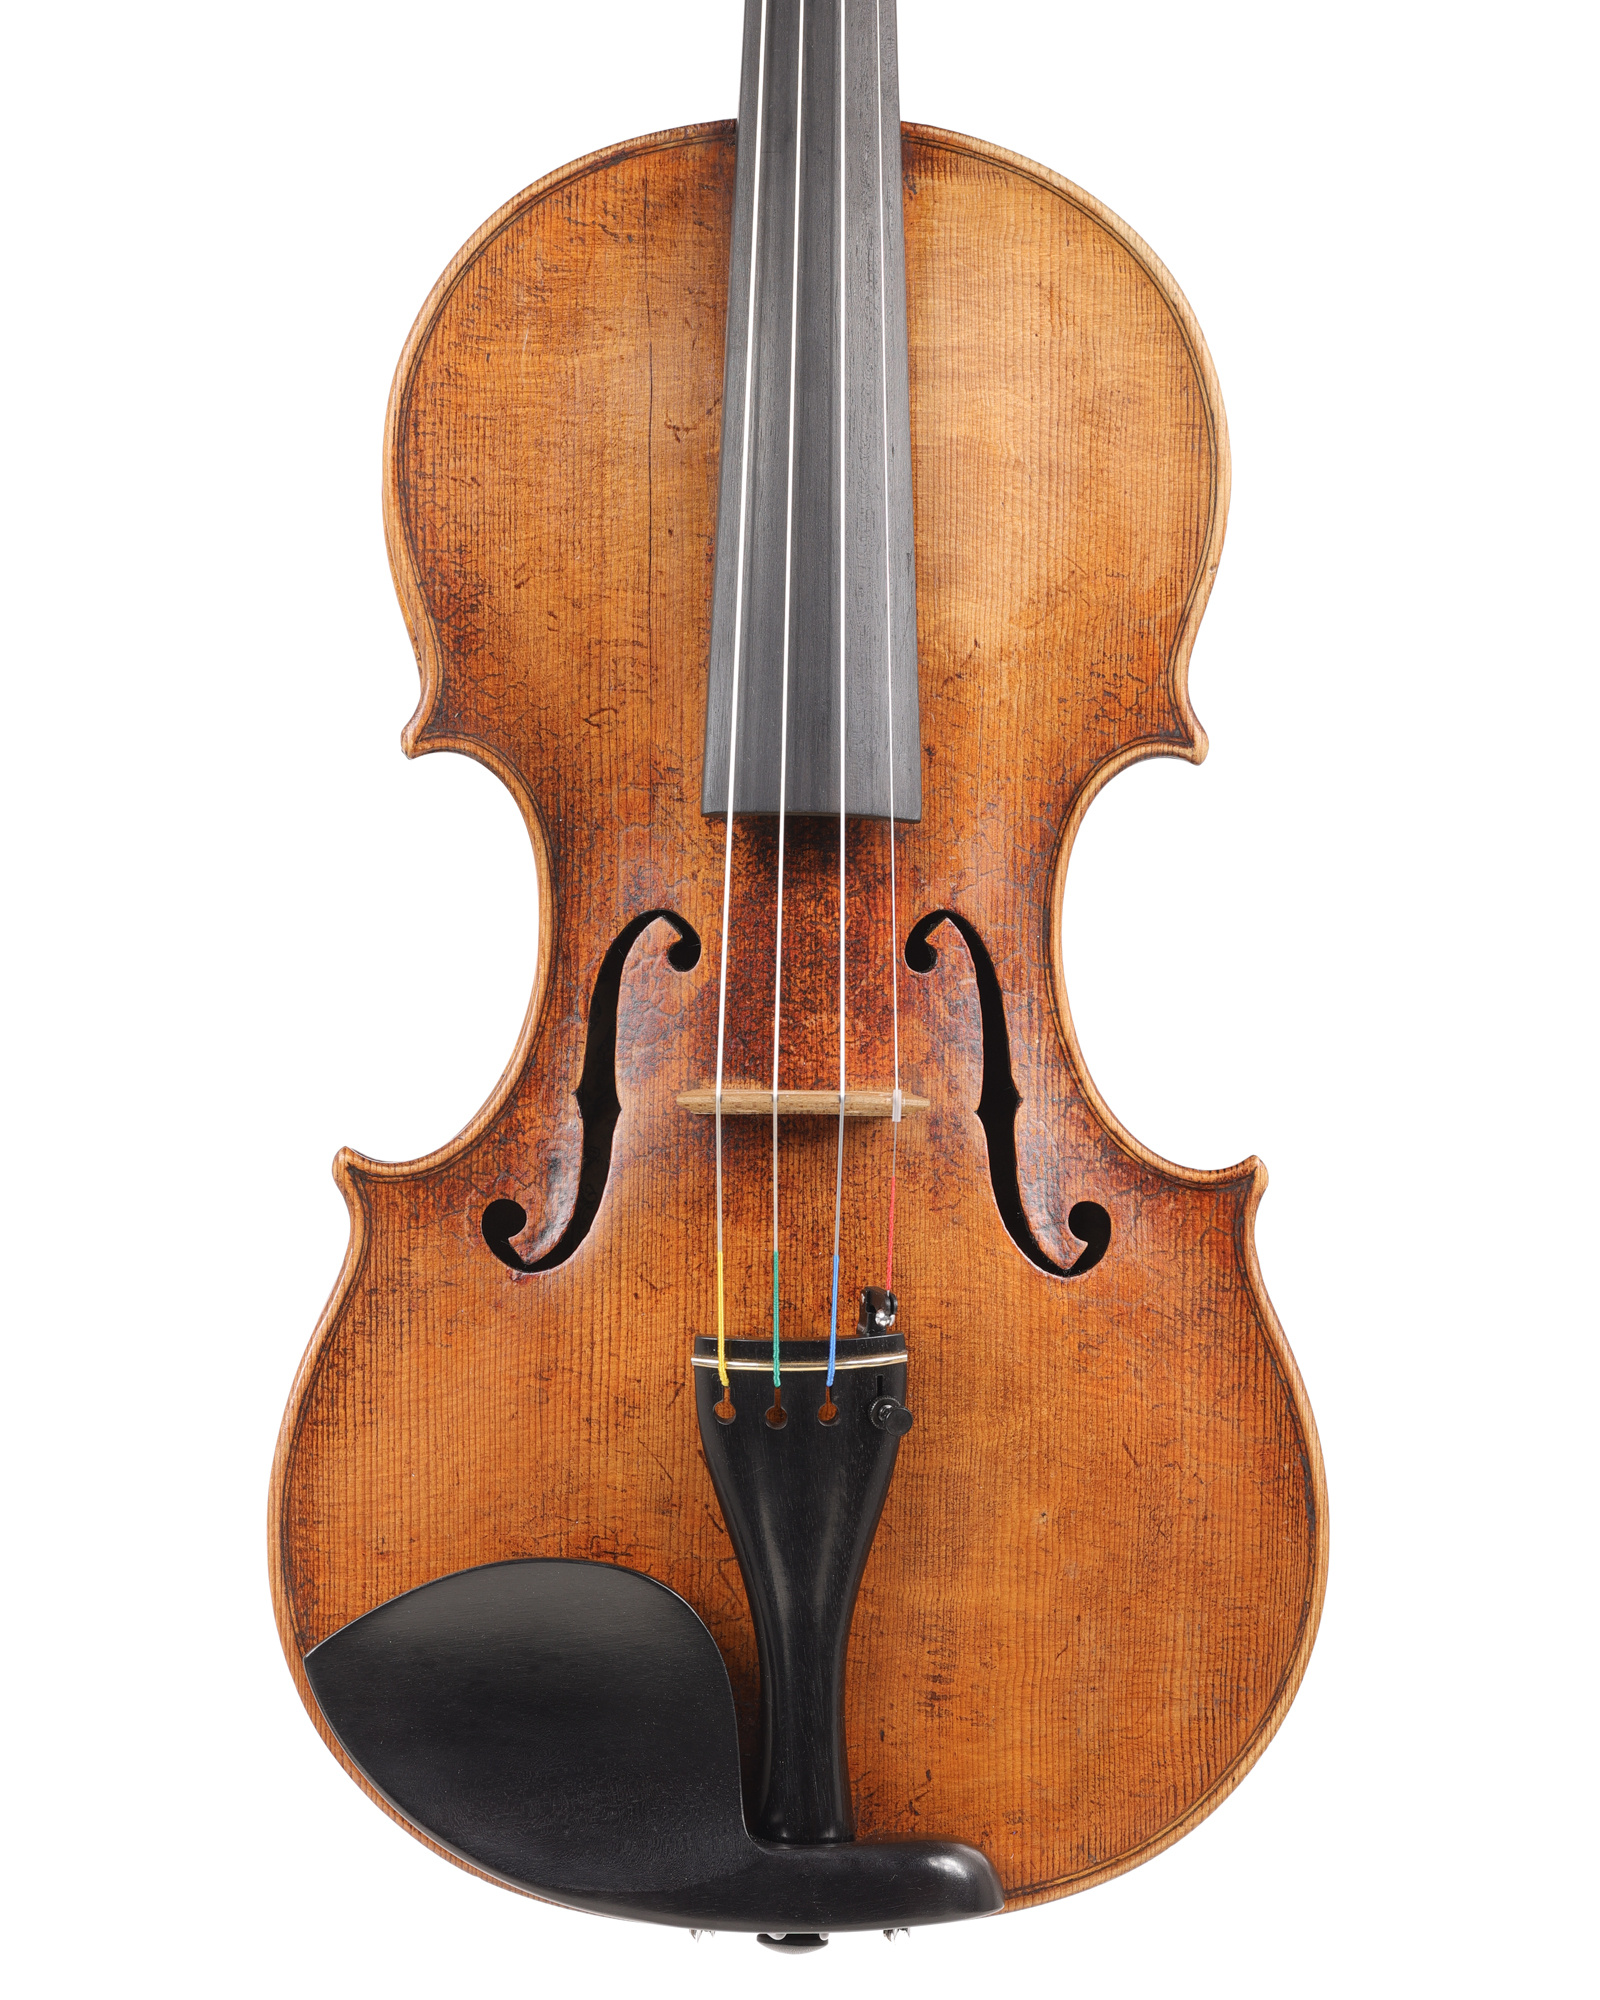 Andreas Morelli 4/4 violin, Amati model, c. 1920, Markneukirchen, Germany